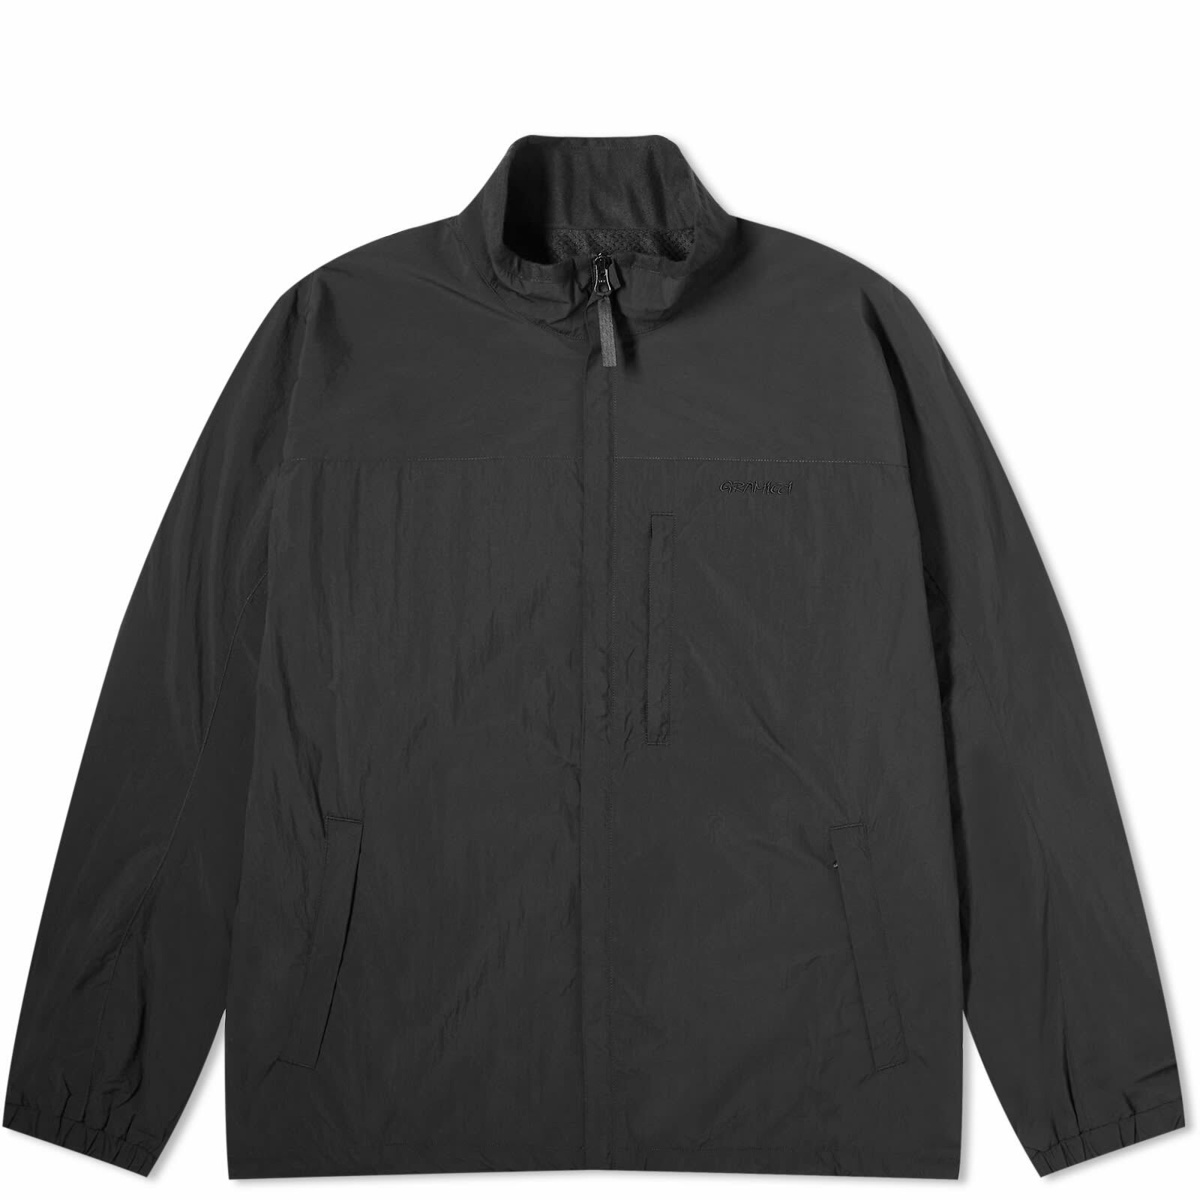 Gramicci Men's Thermal Fleece Jacket in Leaf Camo Gramicci